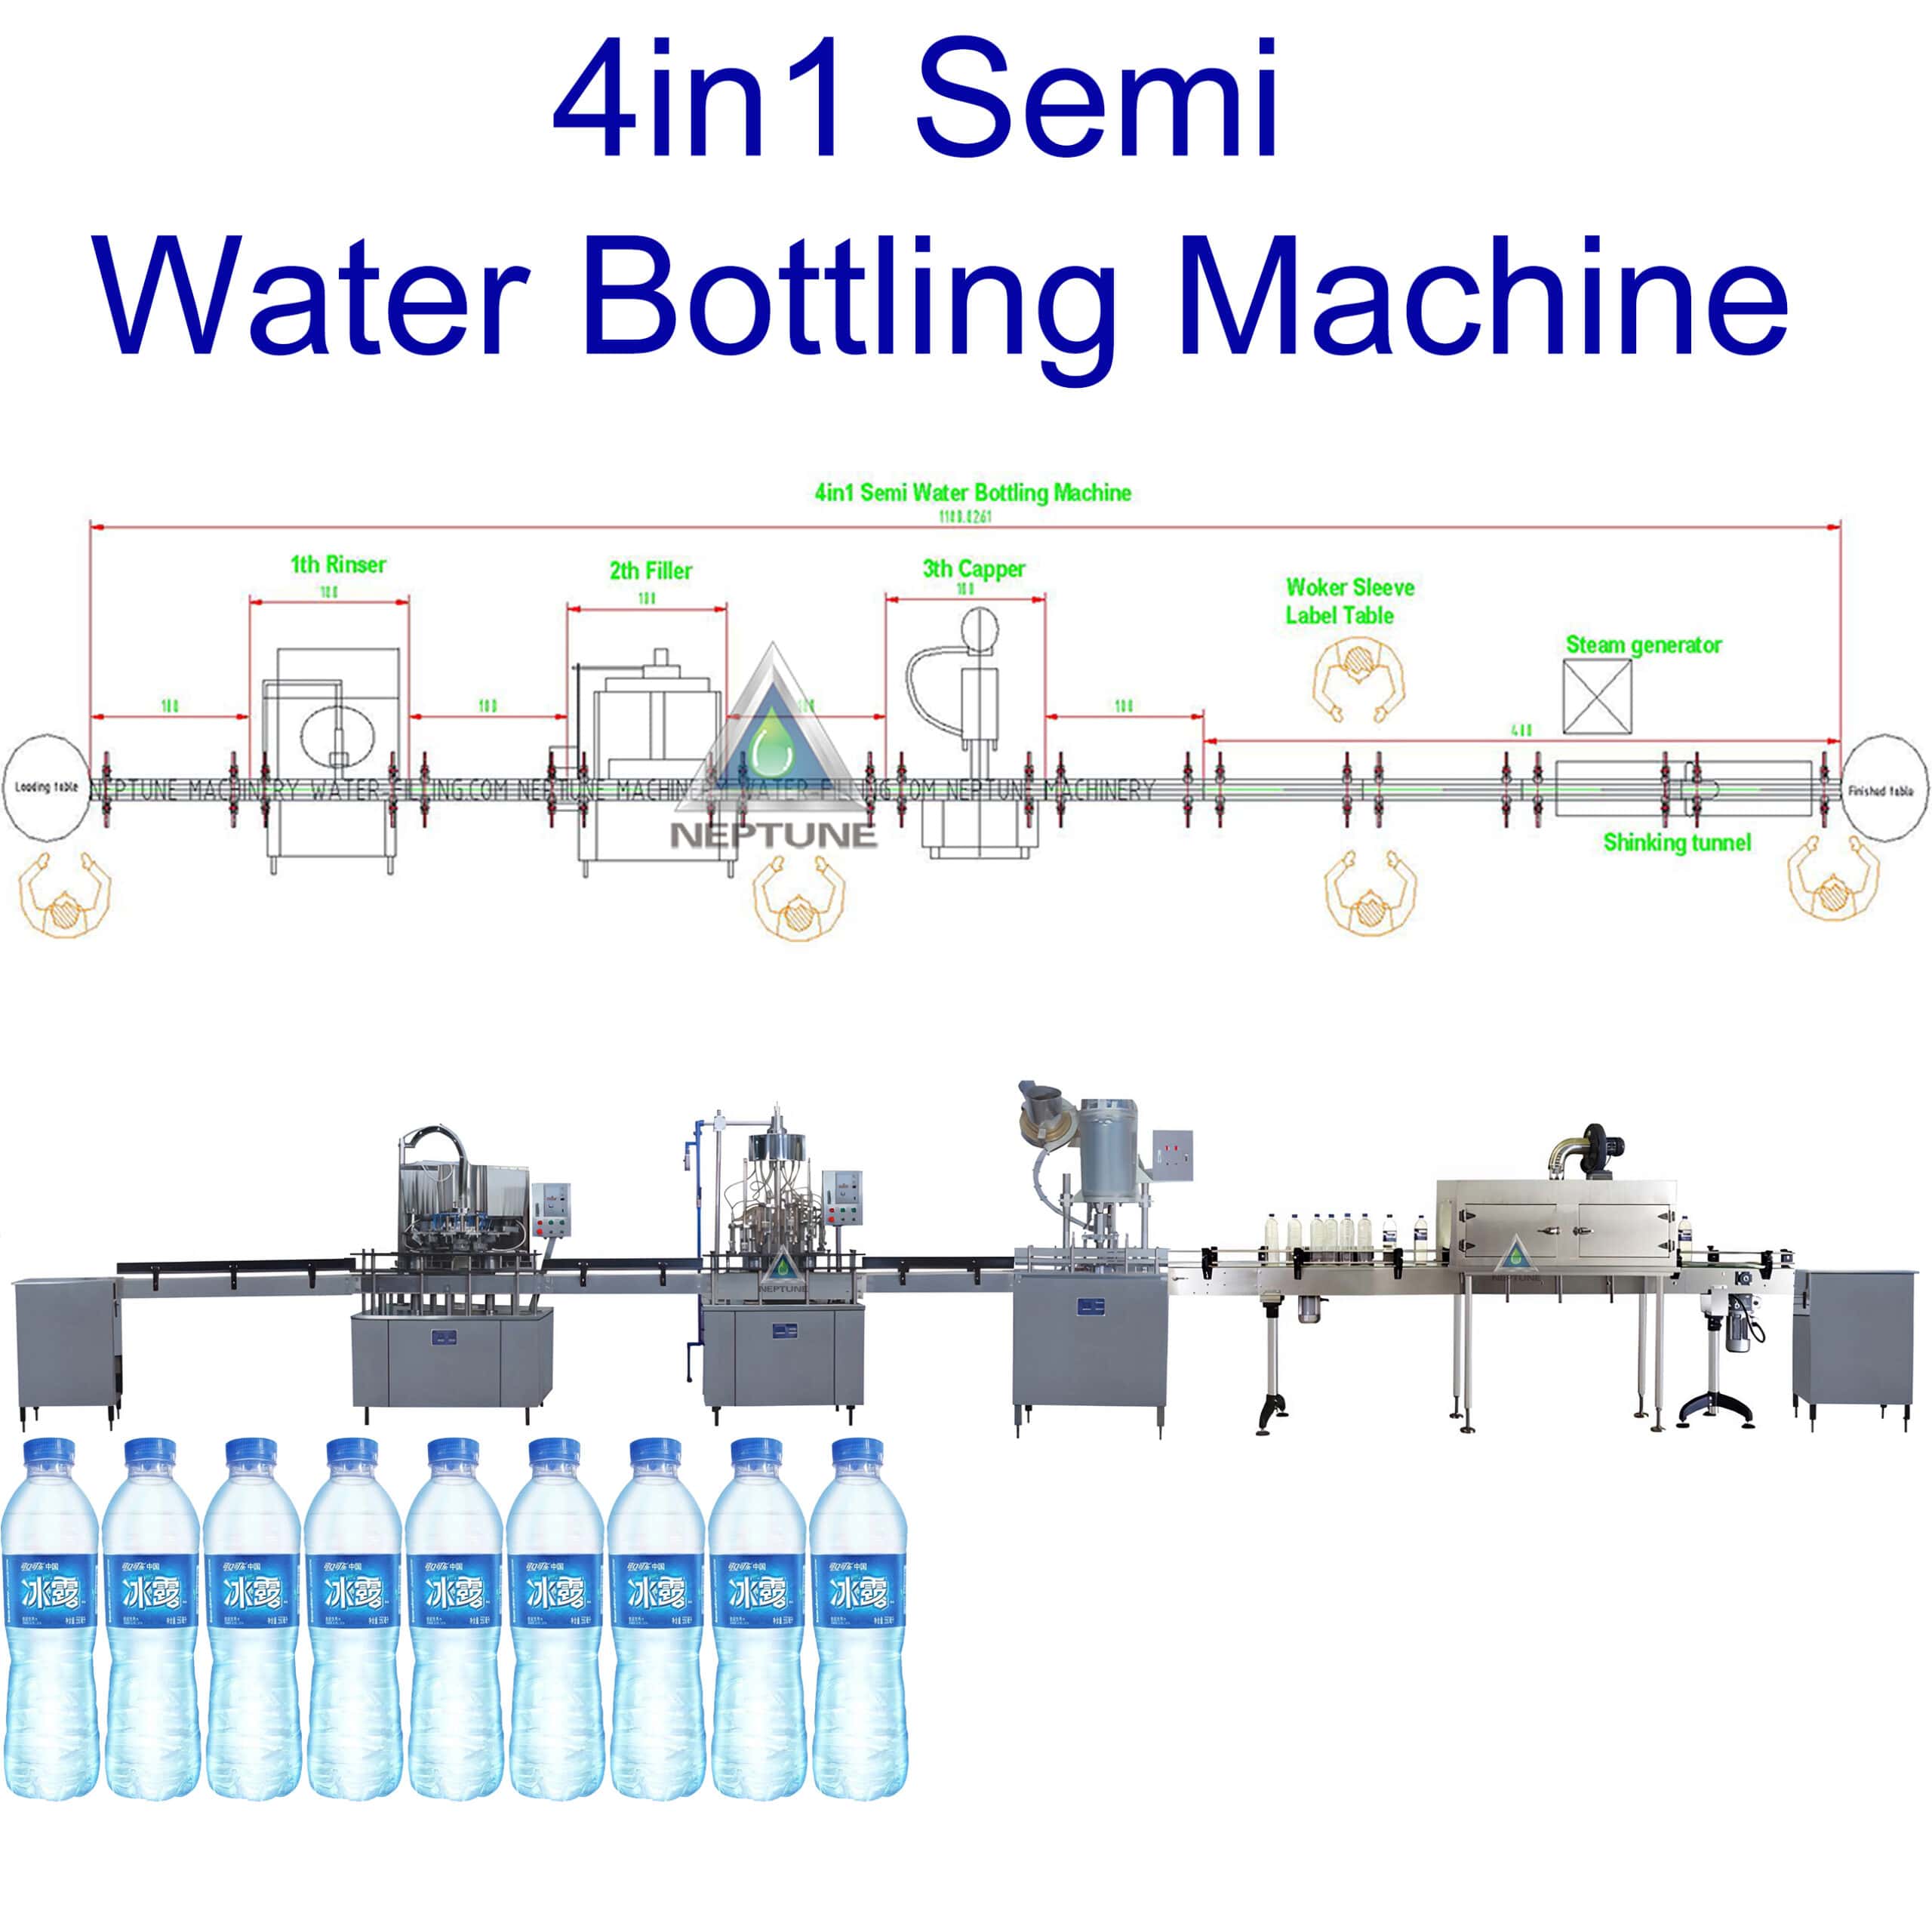 4in1 Semi Water Bottling Machine